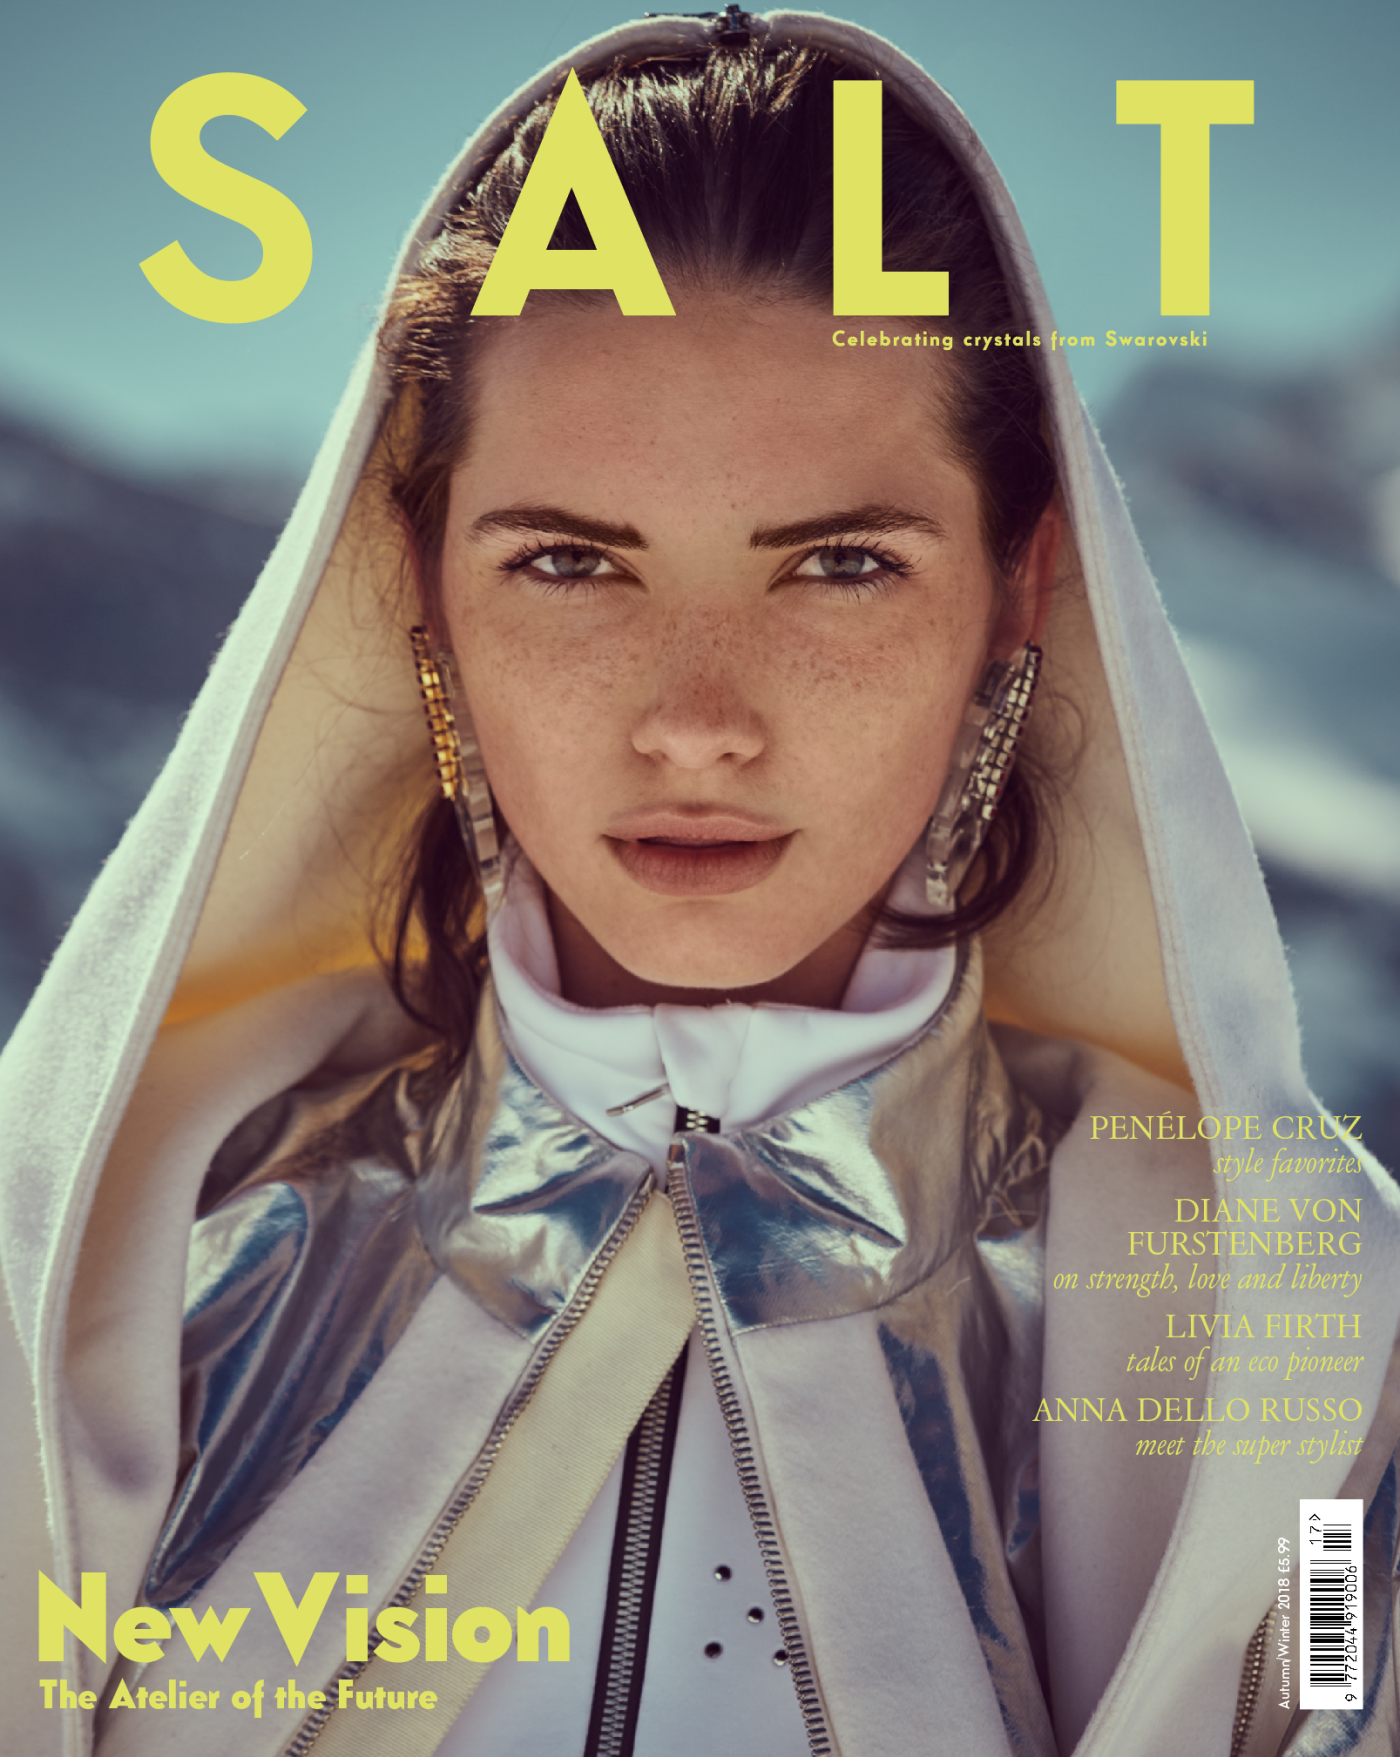 Salt Magazine